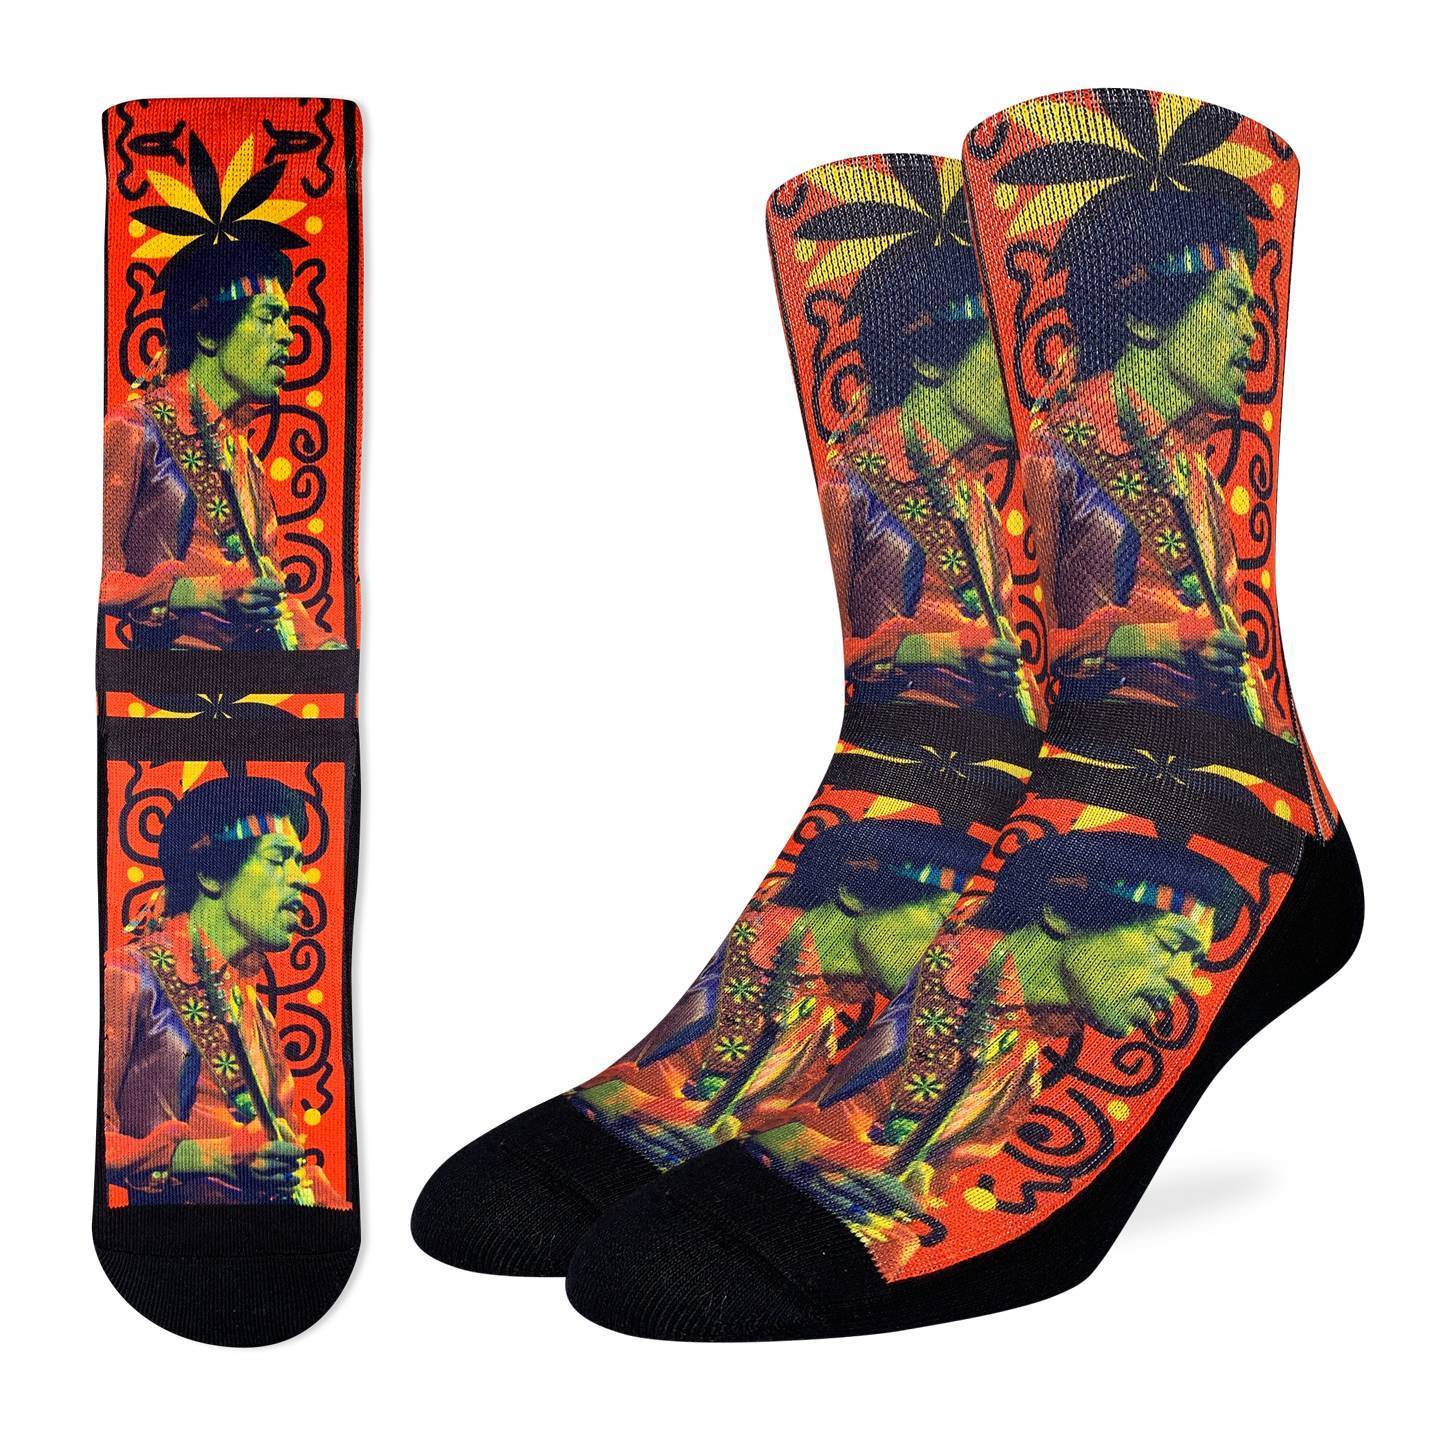 Jimi Hendrix Socks (Size 8-13)